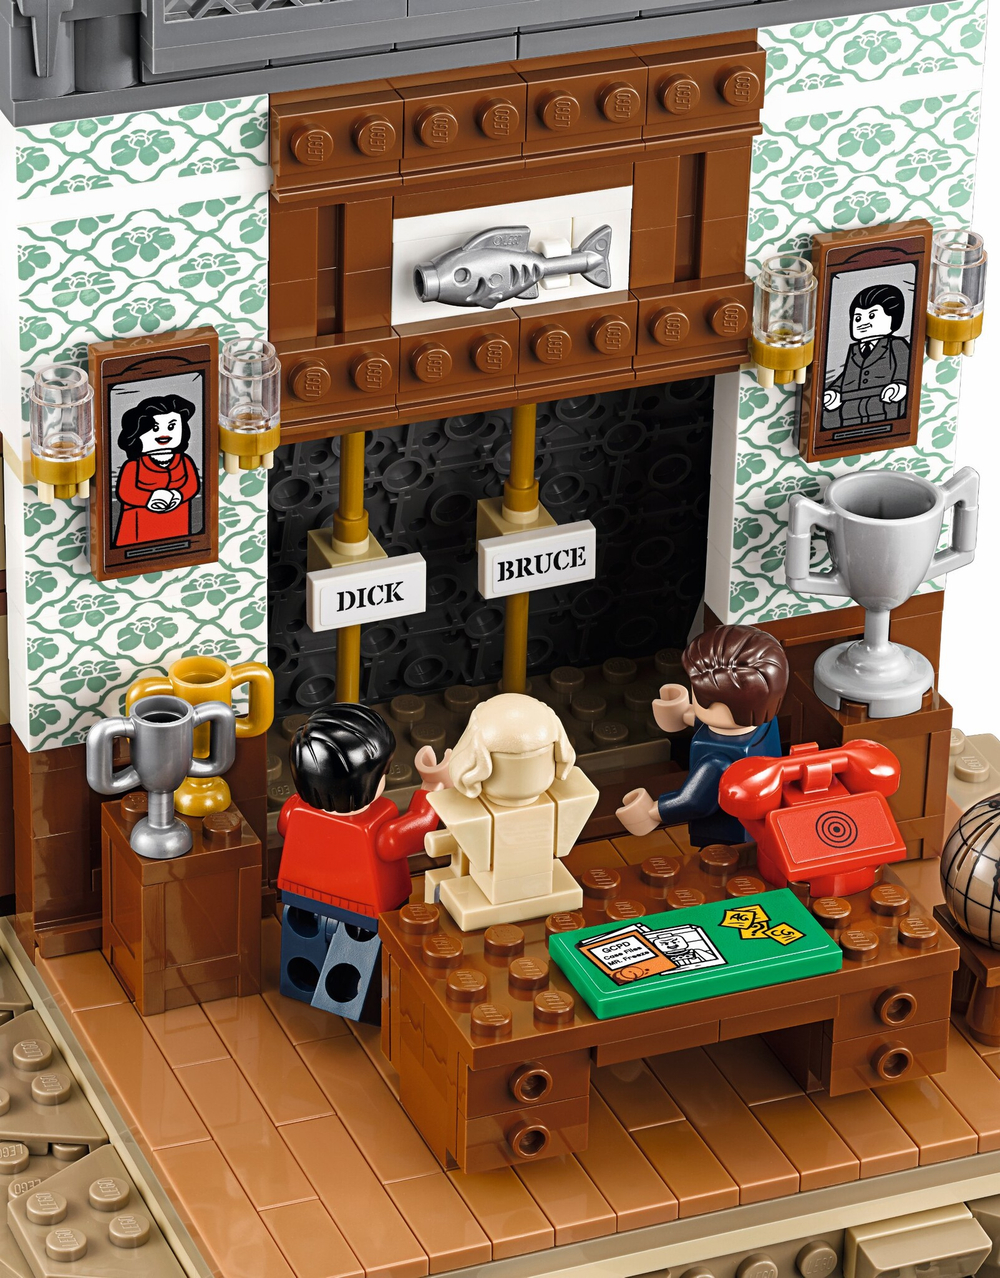 Конструктор LEGO 76052 Логово Бэтмена